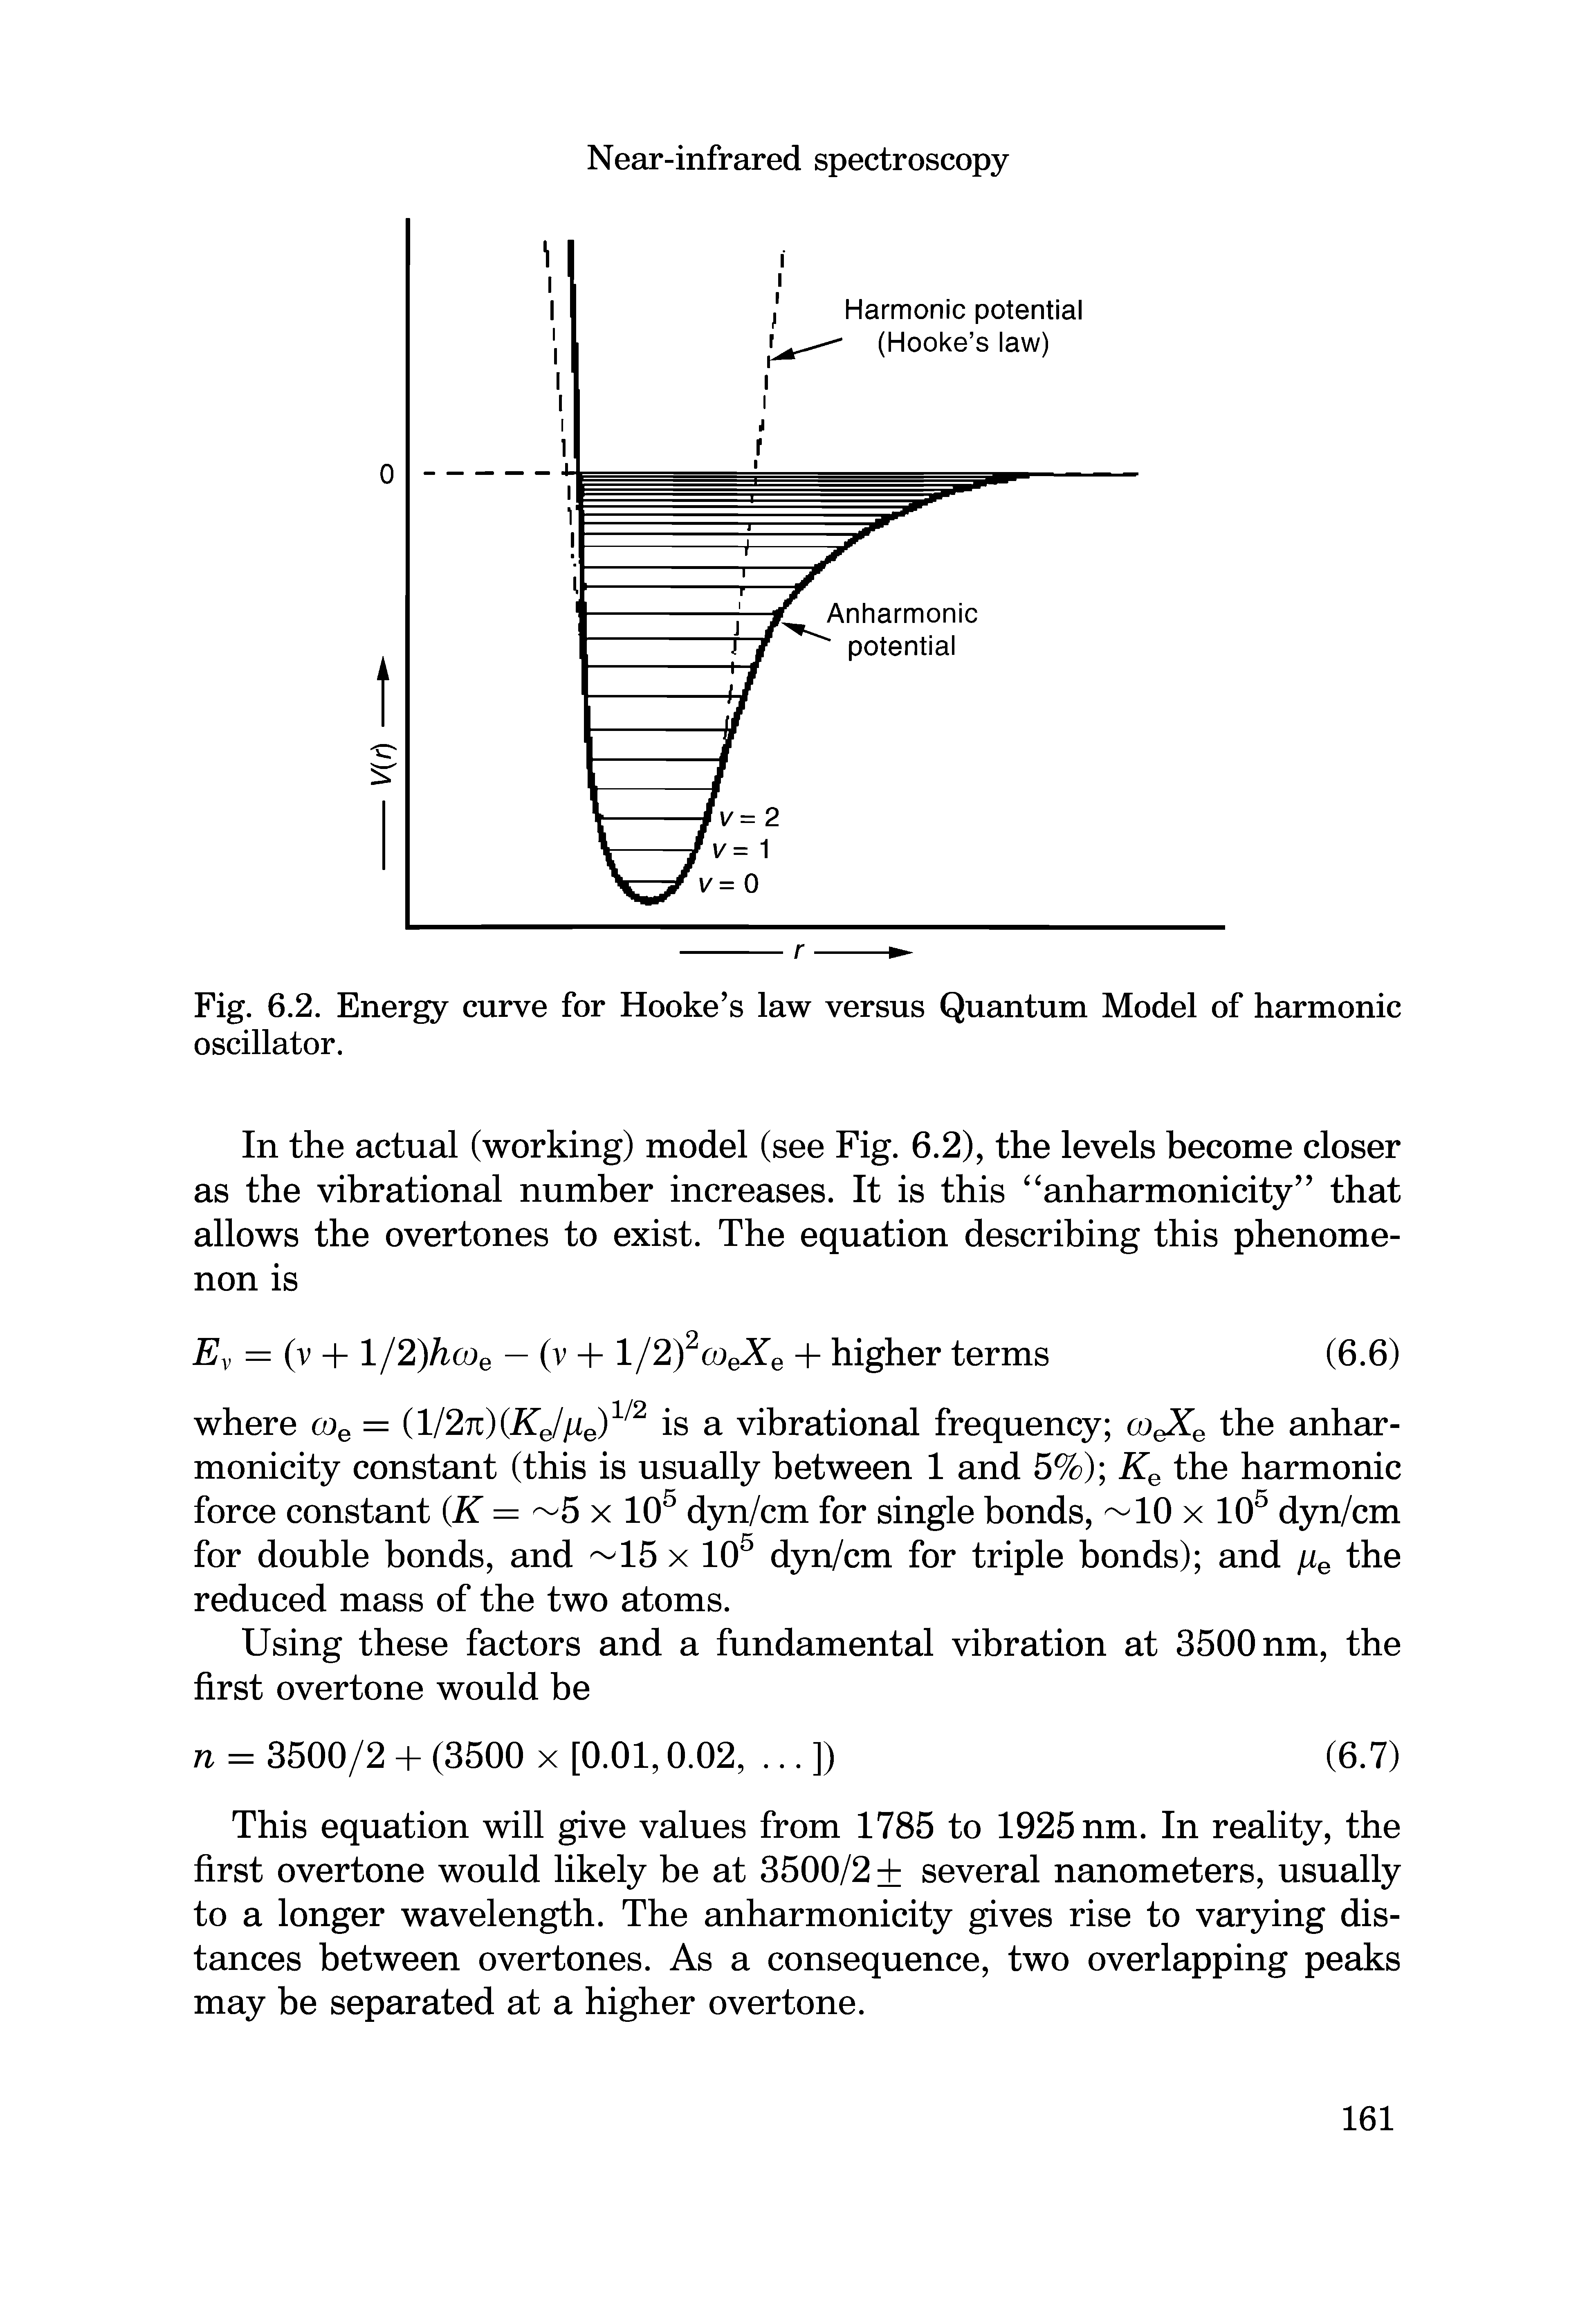 Fig. 6.2. Energy curve for Hooke s law versus Quantum Model of harmonic oscillator.